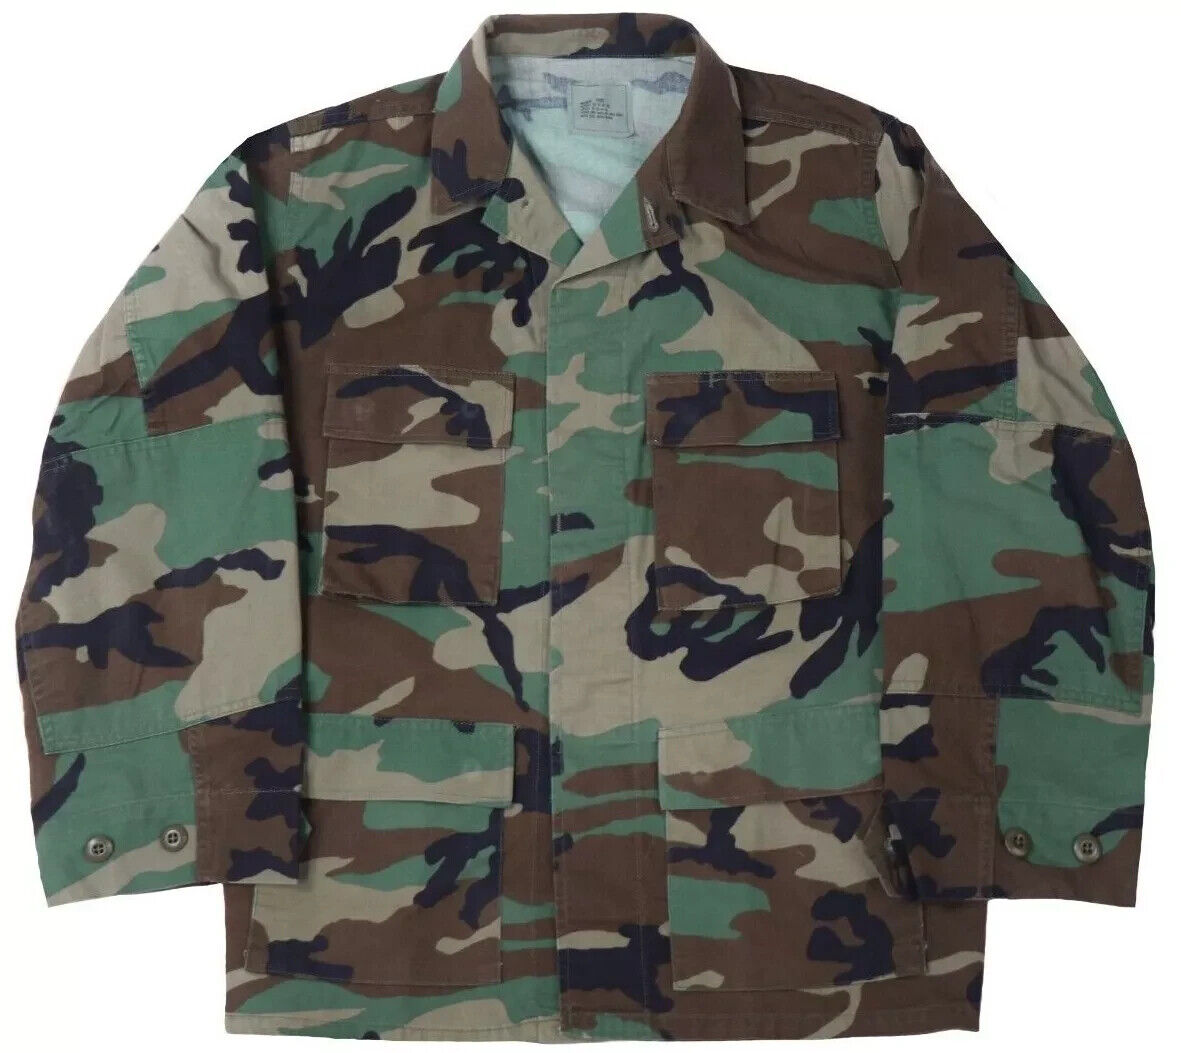 XLarge Reg - US Military BDU M81 Woodland Combat Uniform Shirt Field Jacket Top